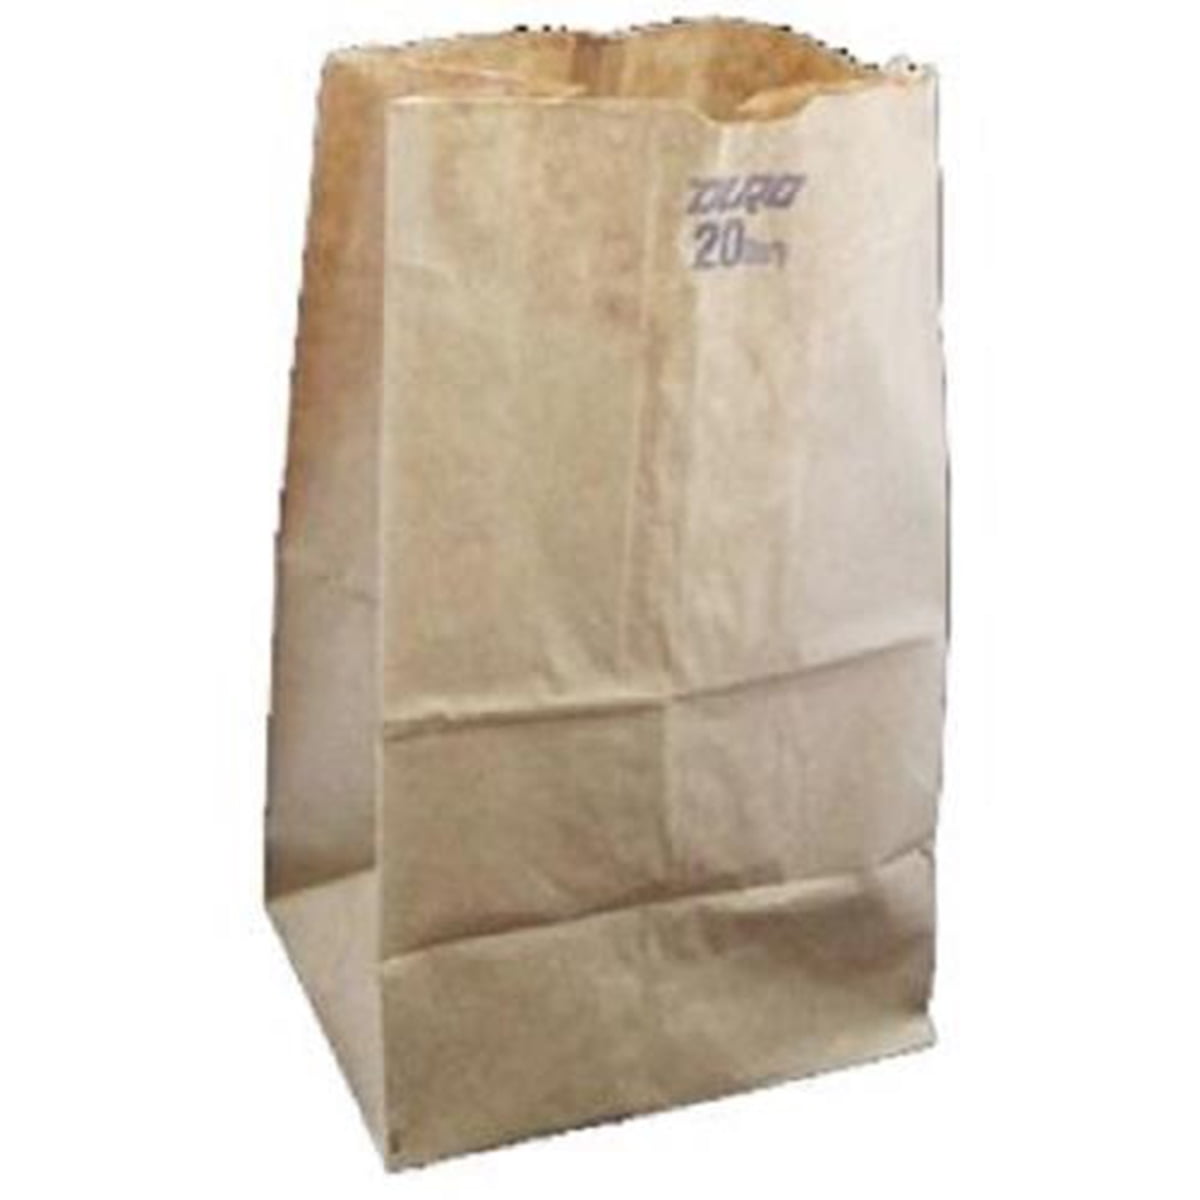 GENERAL SUPPLY #20 Paper Grocery Bag 40lb Kraft Standard 8 1/4 x 5 5/16 x 16 1/8 